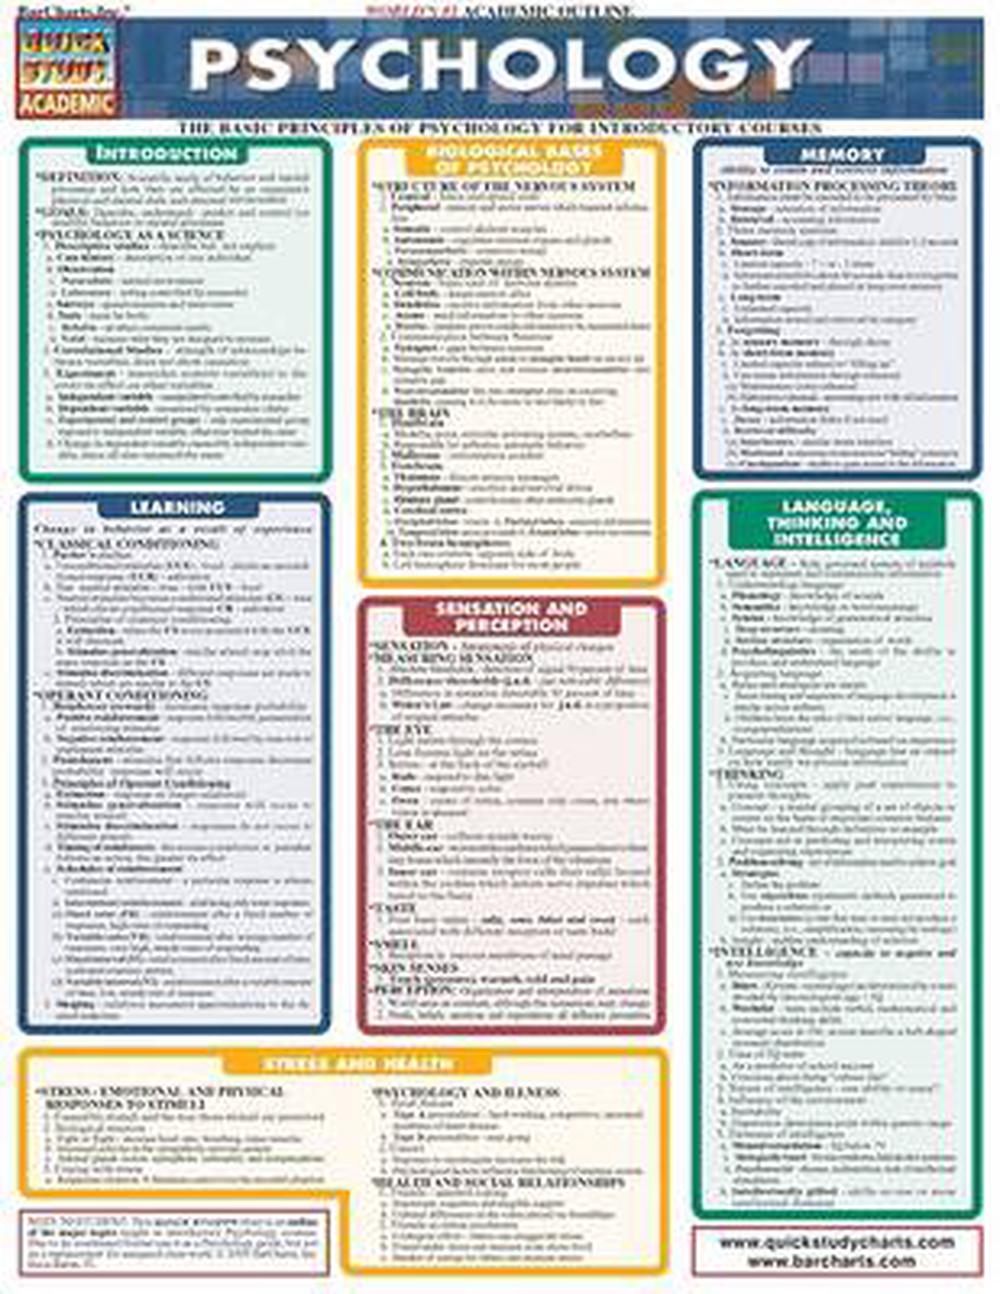 Medical Terminology The Basics Laminate Reference Chart